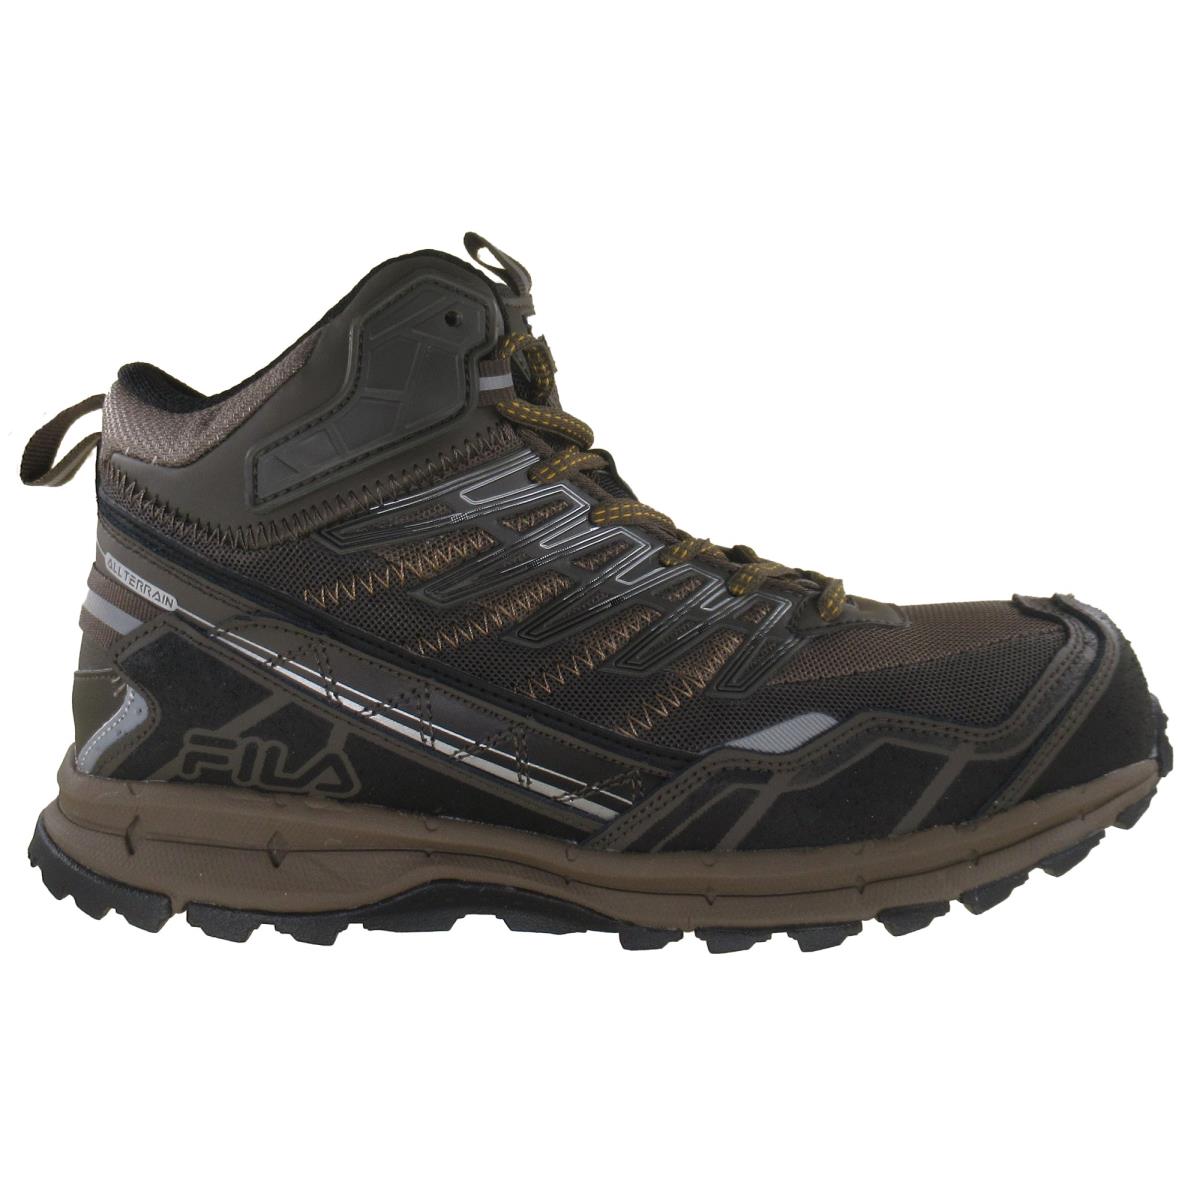 Fila Men`s Hail Storm 3 Mid CT Composite Toe Work Trail Sneaker Boots Walnut/Brown